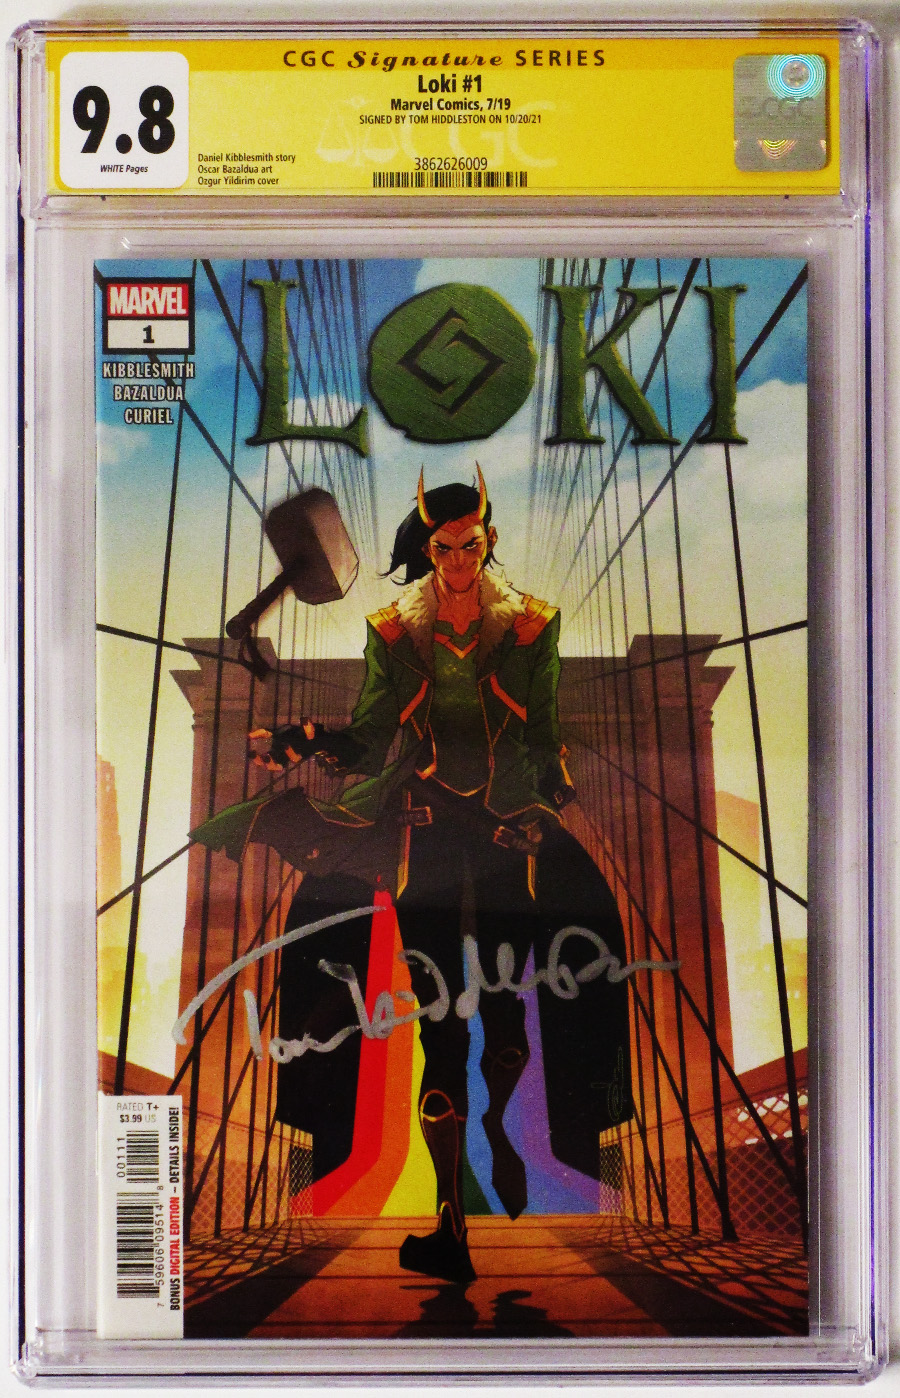 Loki Vol 3 #1 Cover G 1st Ptg Regular Ozgur Yildirim Cover Signed By Tom Hiddleston CGC 9.8